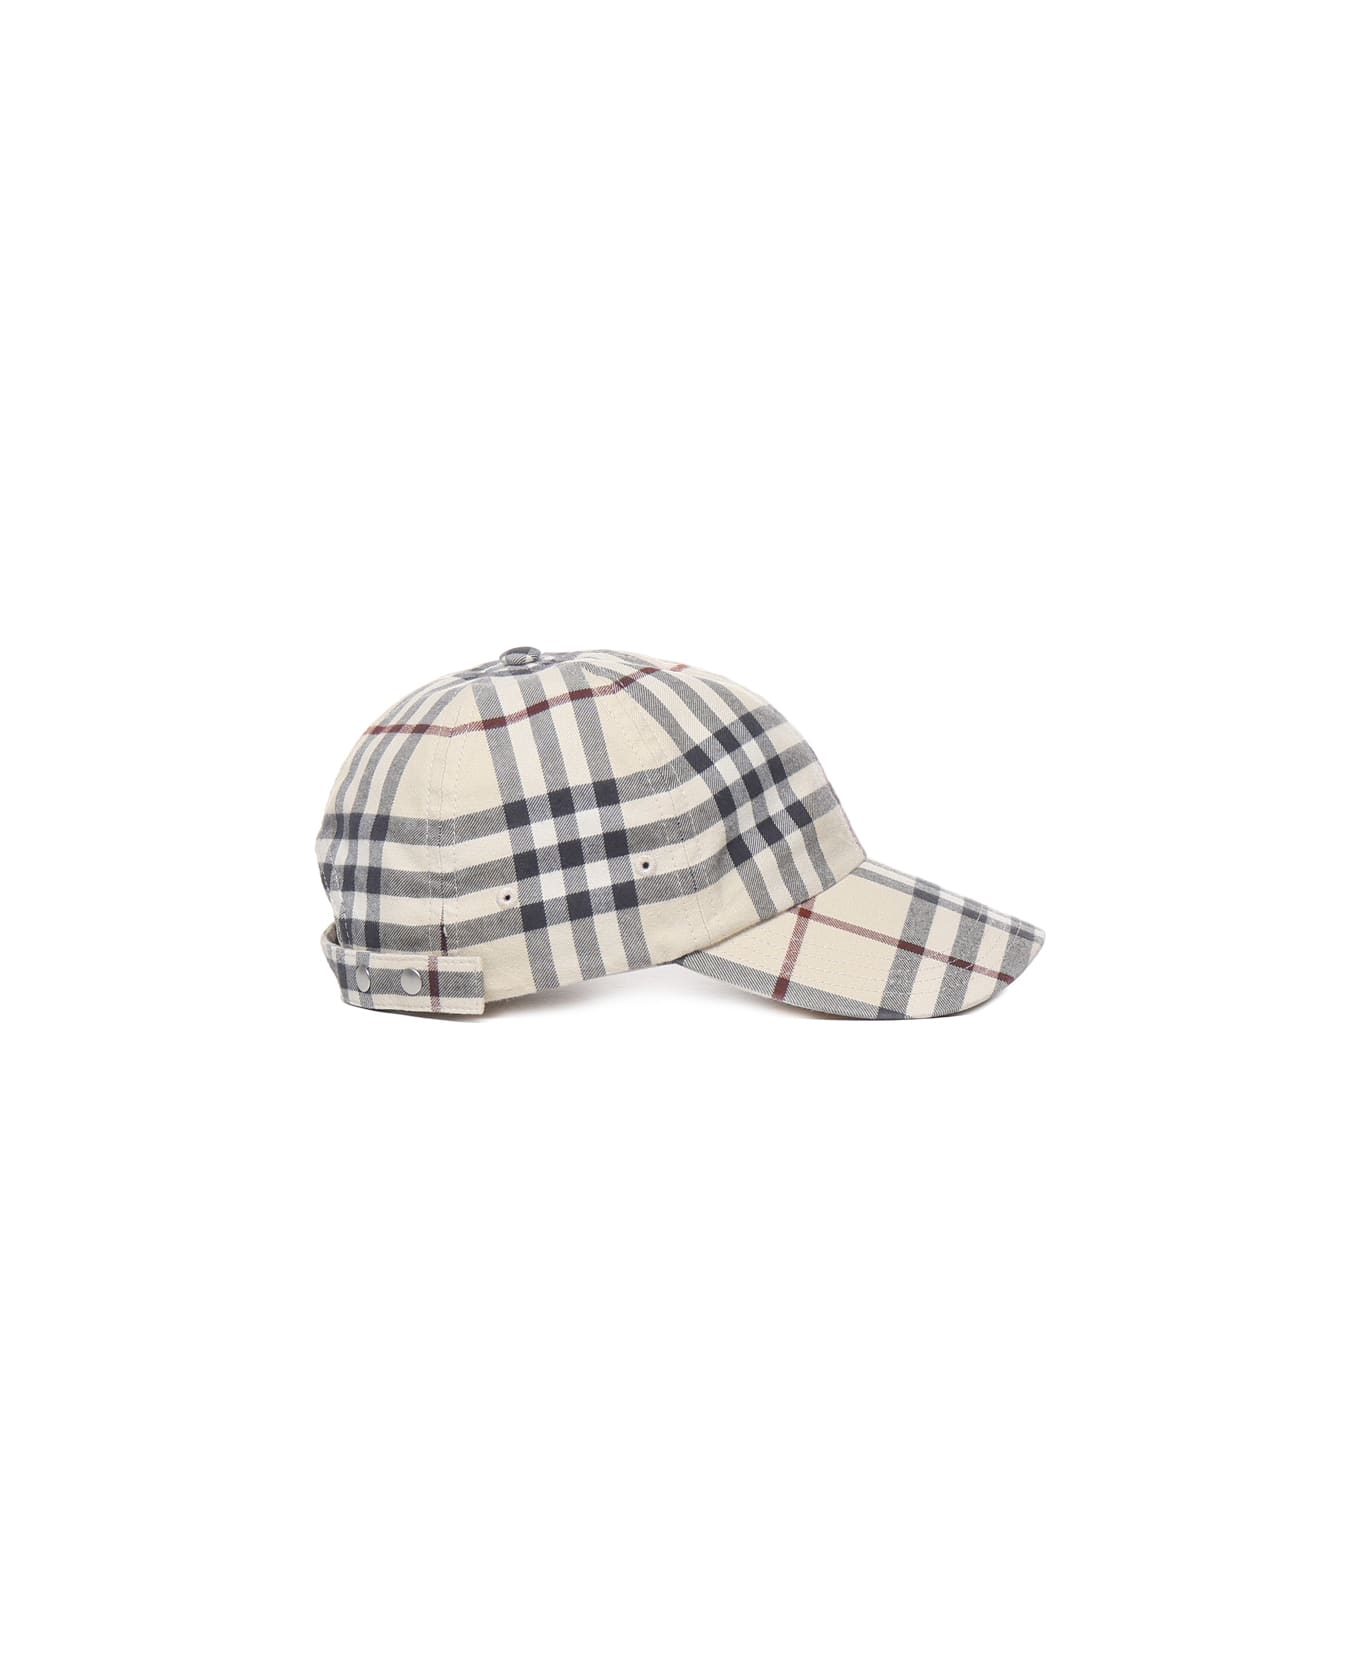 Burberry Baseball Cap With Check Print - Stone 帽子